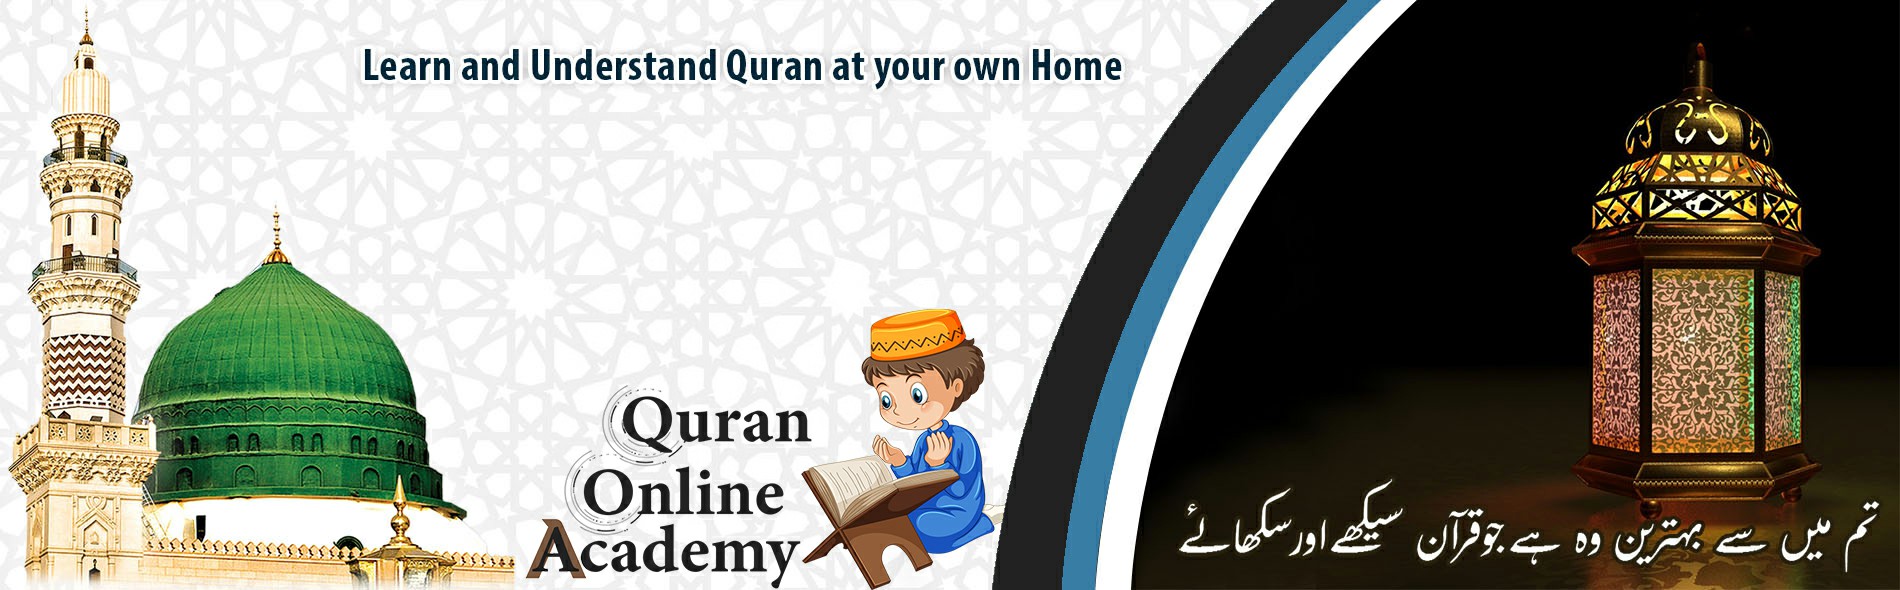 Al quran learning academy UK